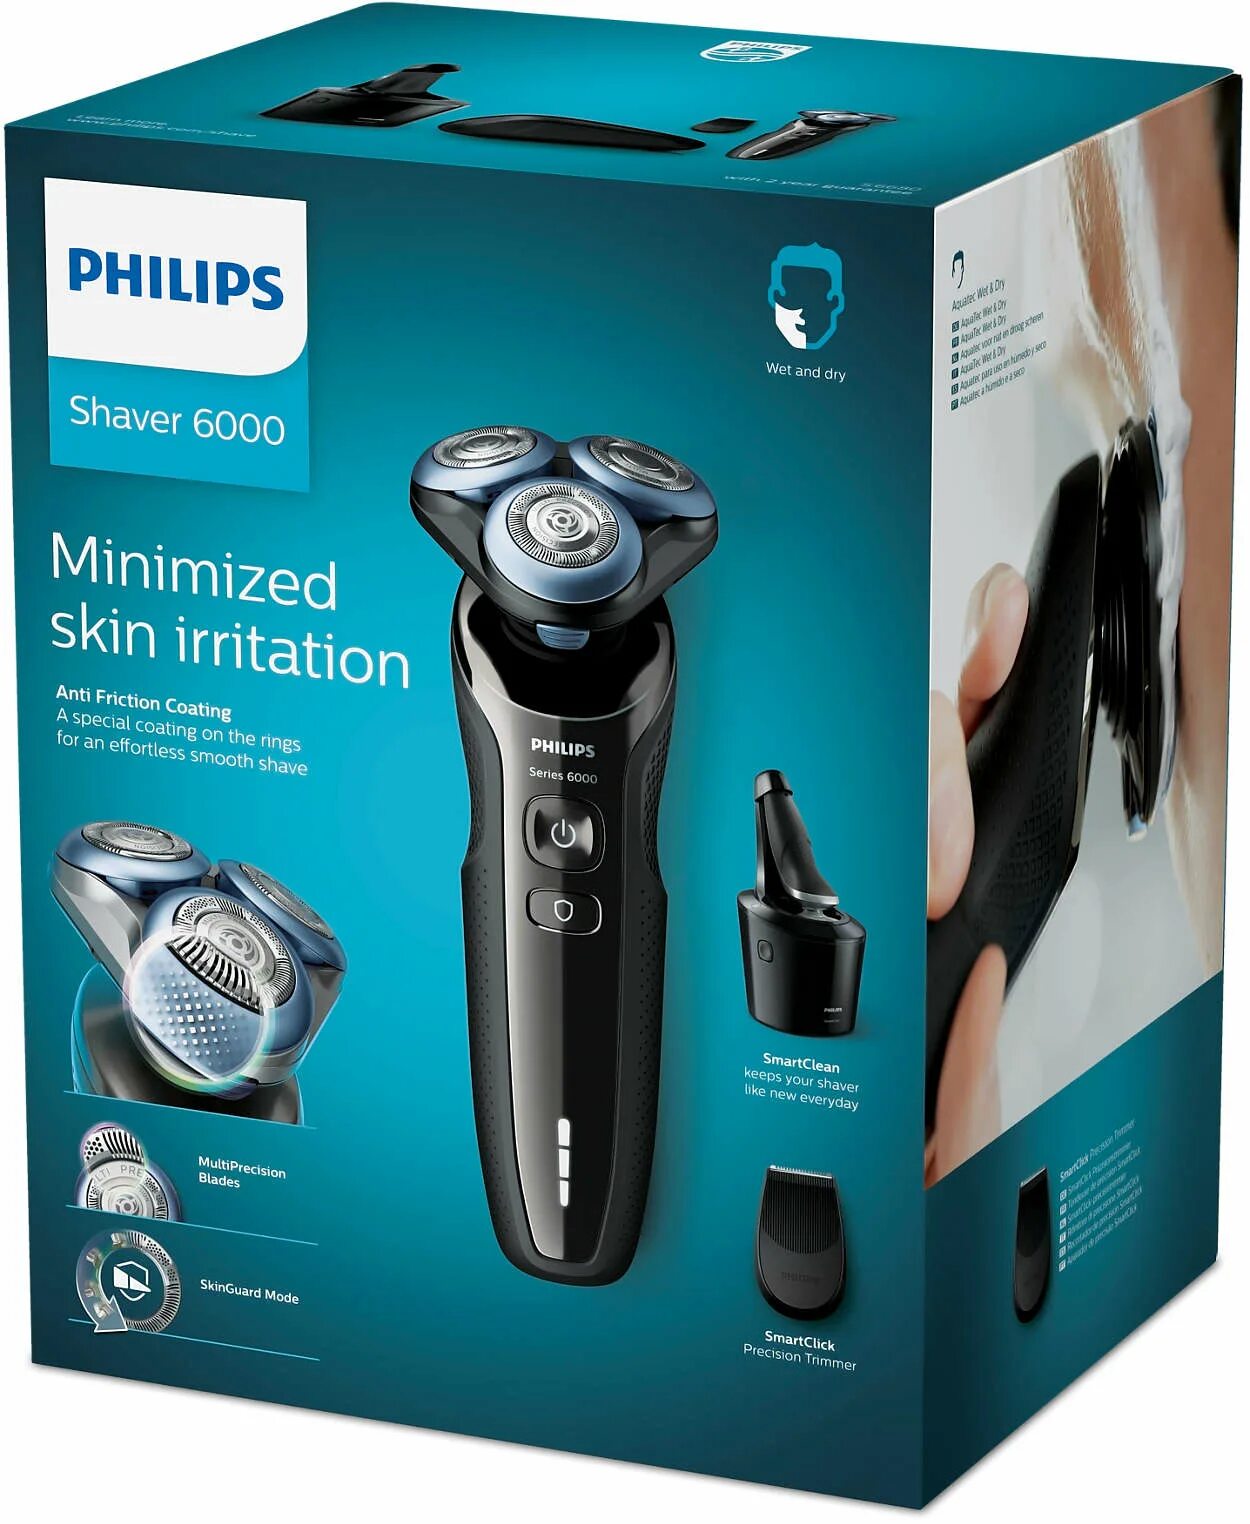 Philips s6000. Philips 6000 Series. Электробритва Филипс 6000. Philips Shaver Series 6000. Филипс 6000